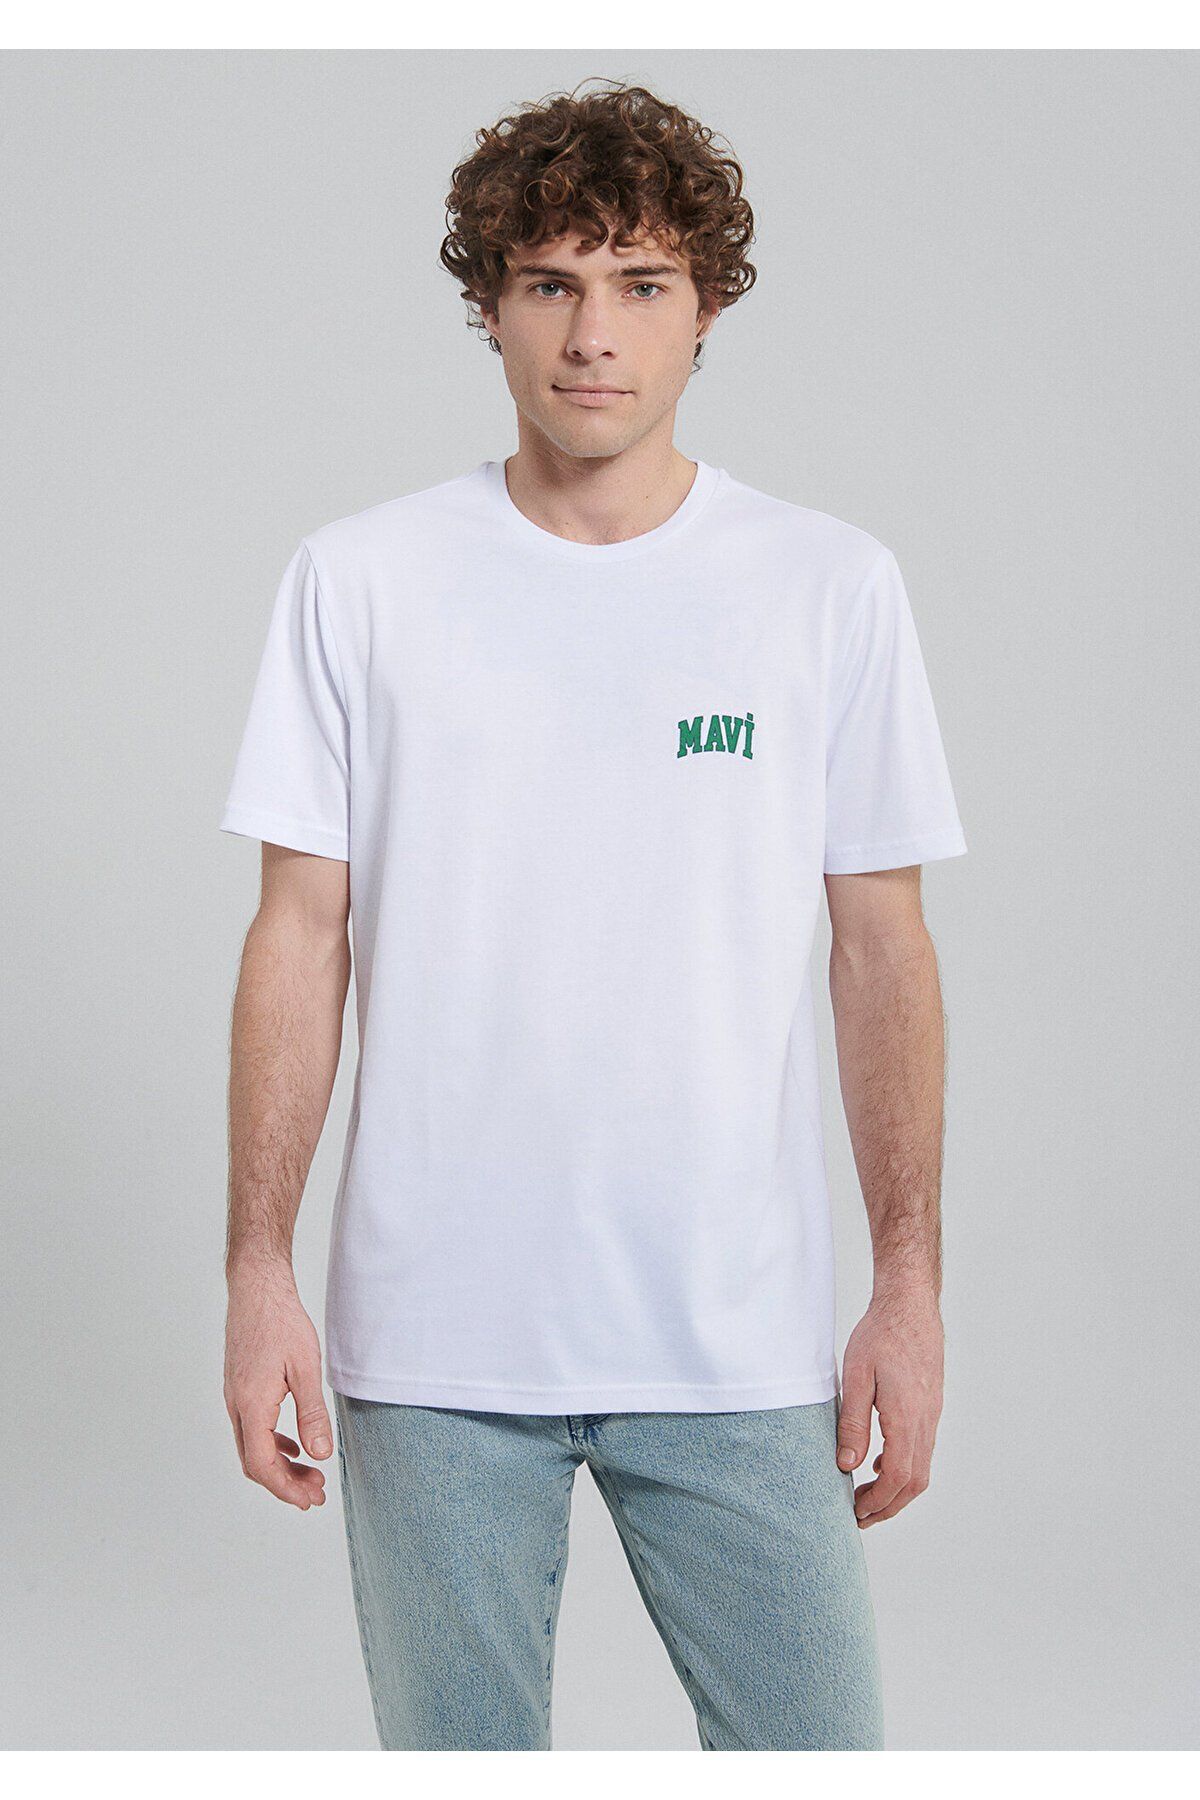 Mavi آرم مردان آبی تی شرت سفید چاپ شده 0611714-620